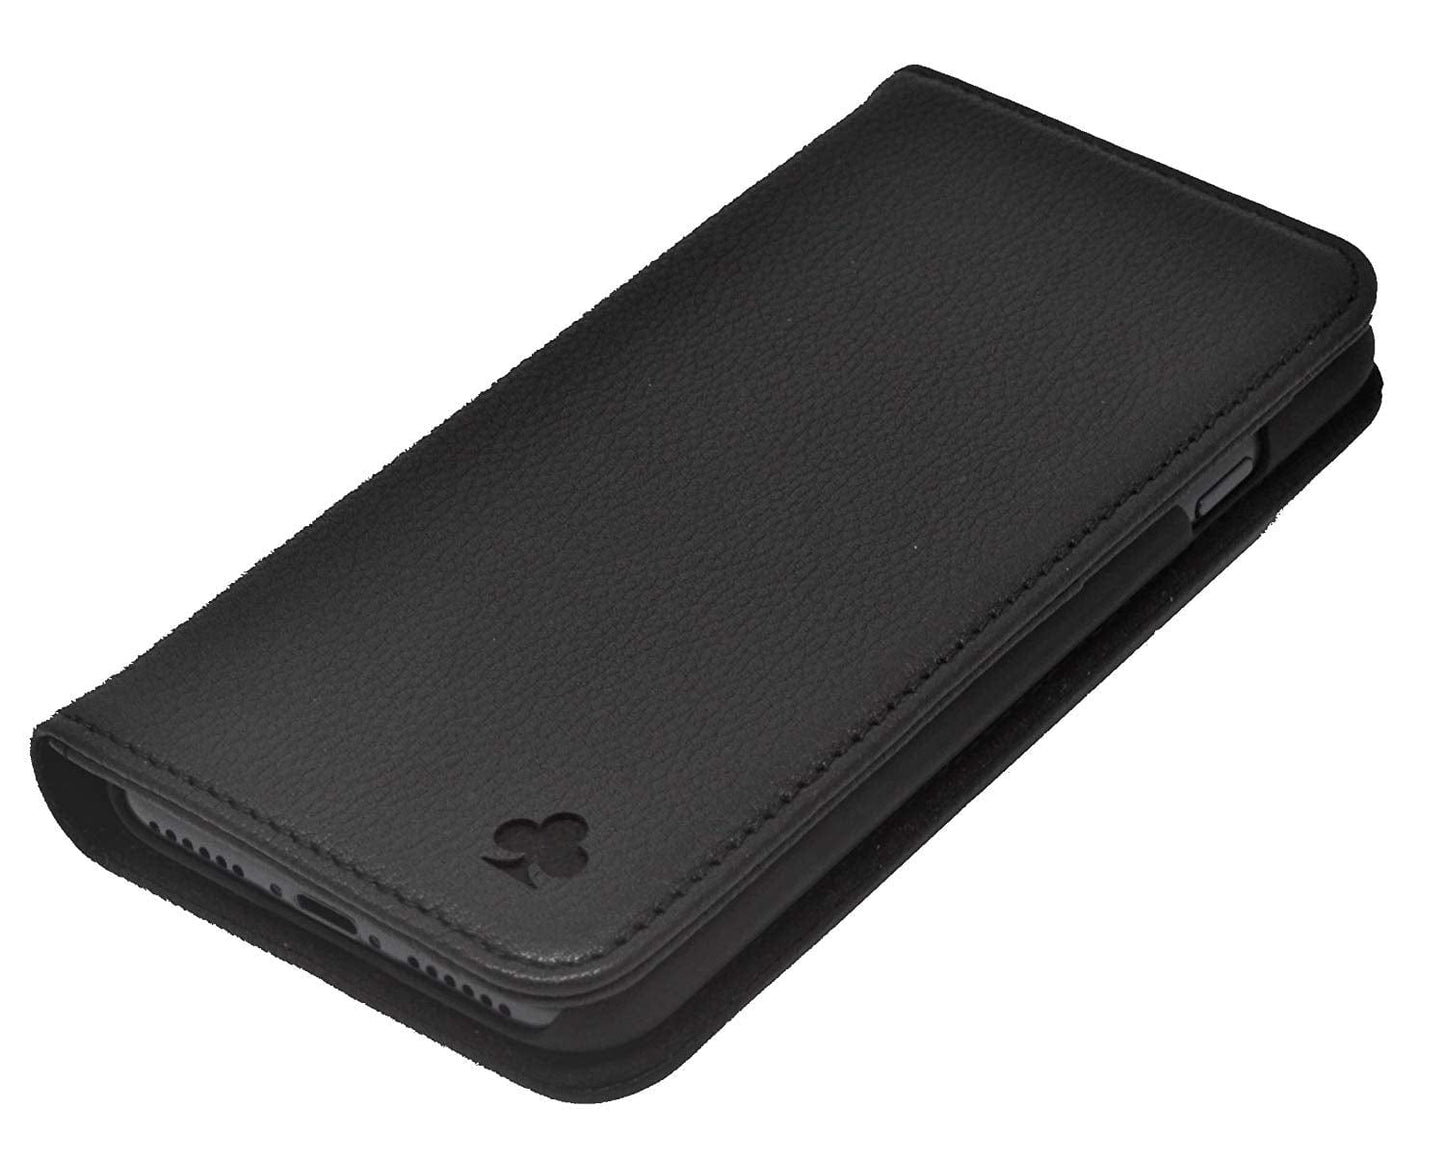 Google Pixel 2 XL Leather Case. Premium Slim Genuine Leather Stand Case/Cover/Wallet (Black)